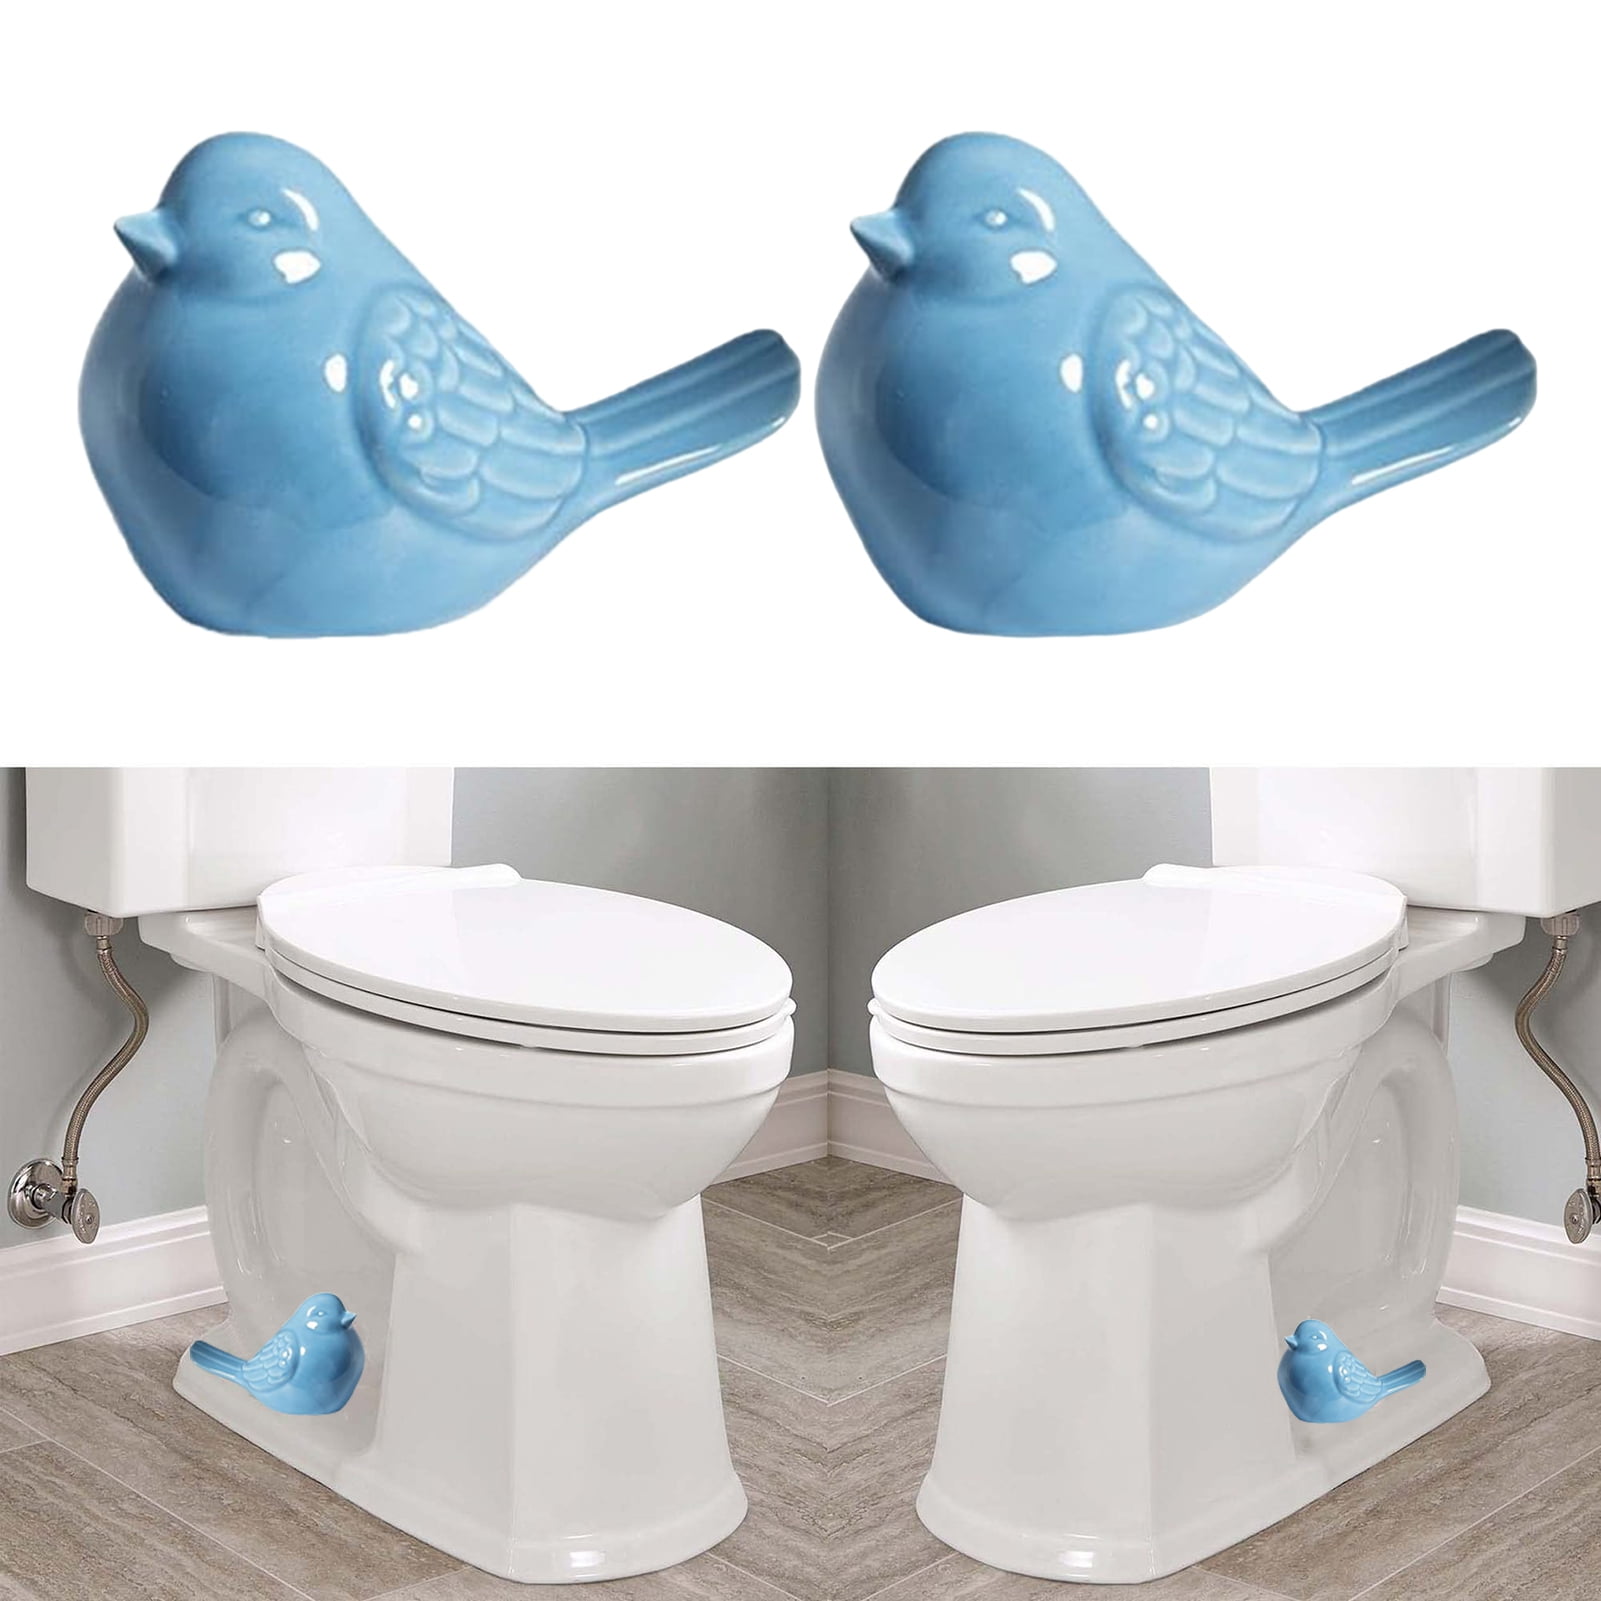 LINASHI Resin Toilet Bolt Cover Blue Bird Toilet Bolt Cover Resin